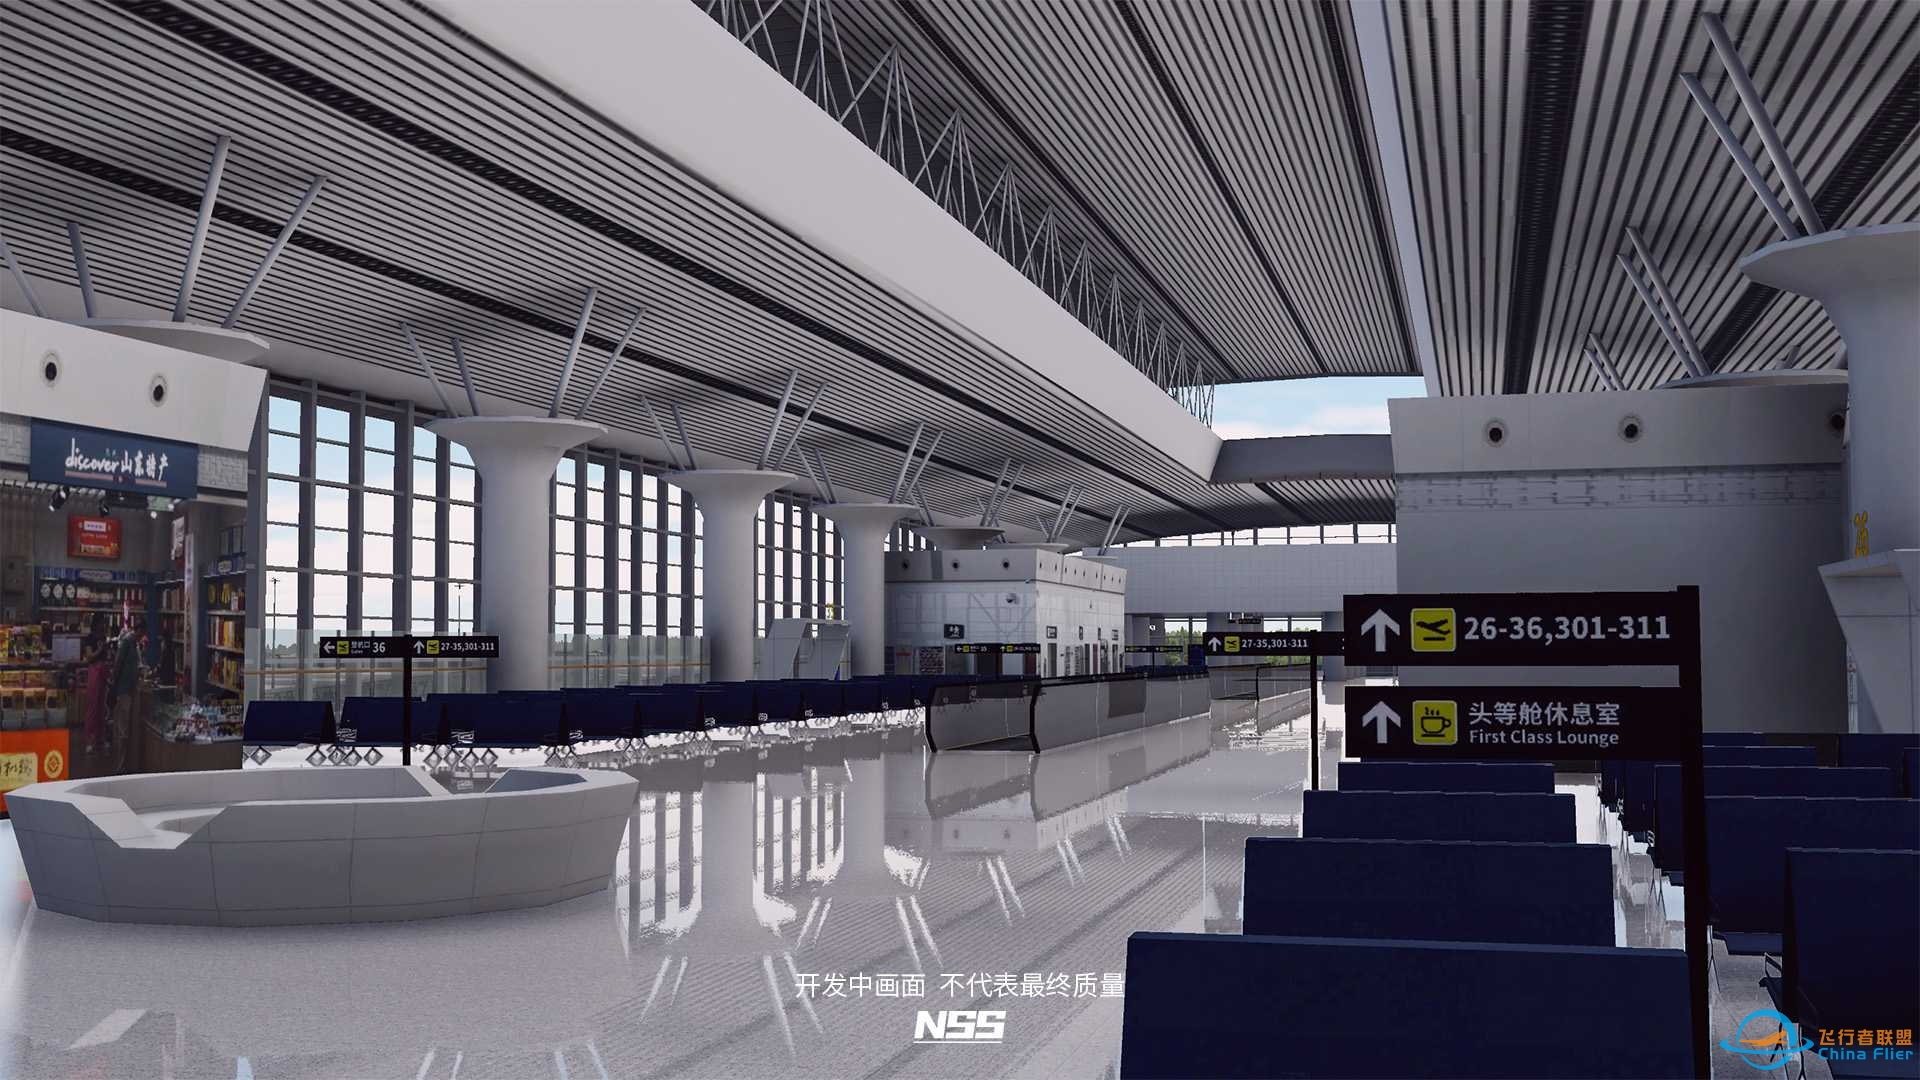 NSS地景开发组 | ZSJN | 济南遥墙国际机场项目最新进展-4188 